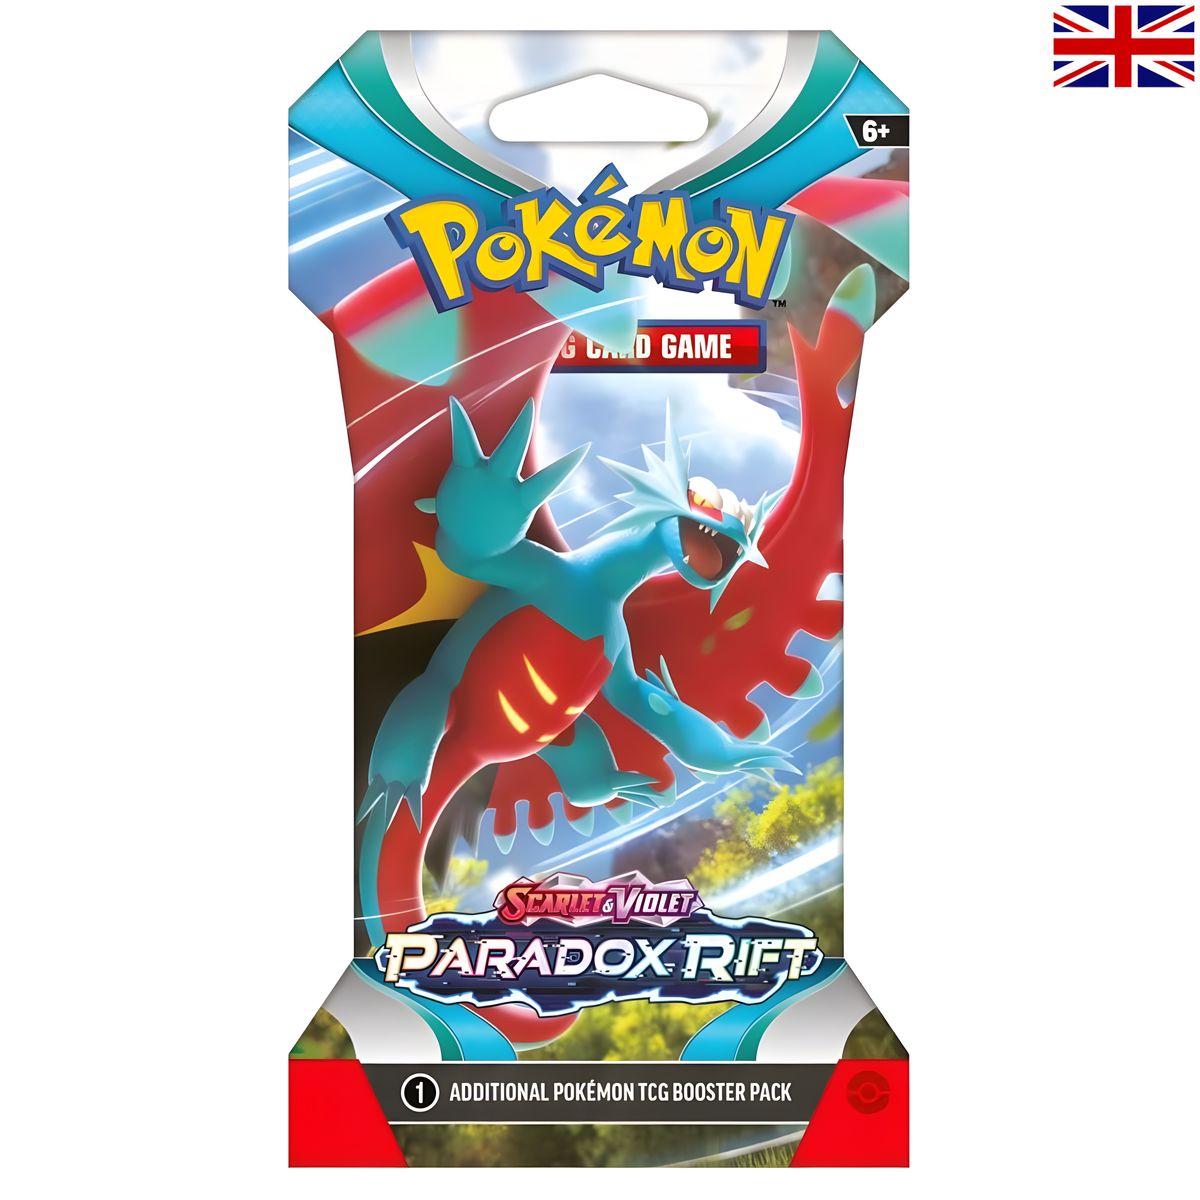 Pokémon - Paradox Rift Sleeved Booster